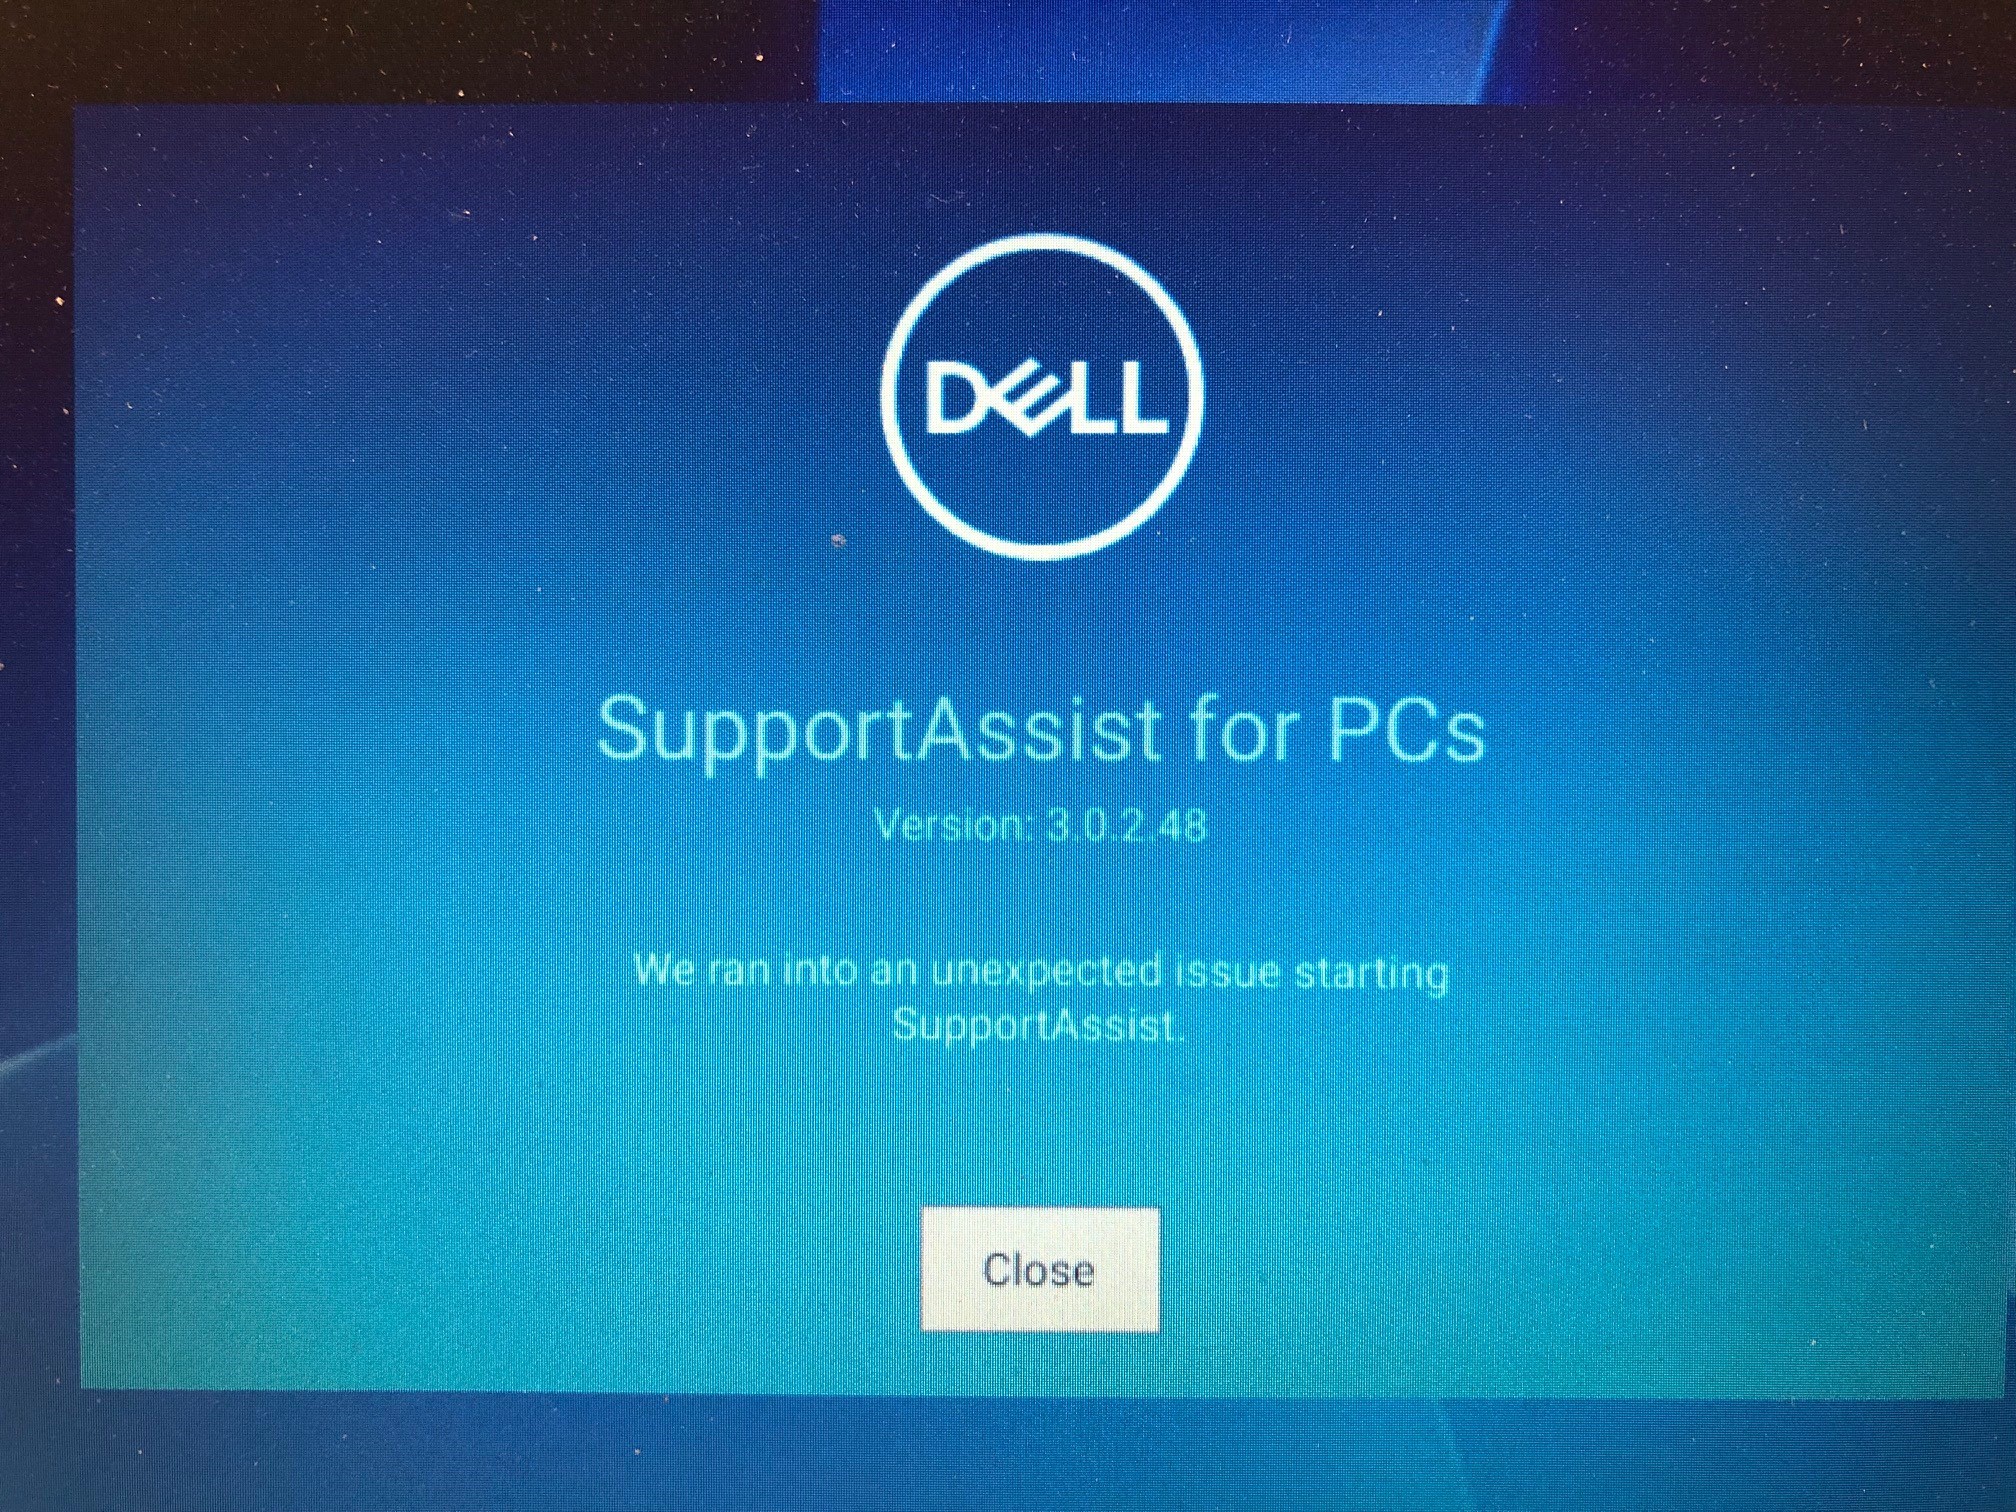 Ремонт dell spb dell support ru. Dell support Assistant. Dell support assist. Делл суппорт ассистент. Программы dell.